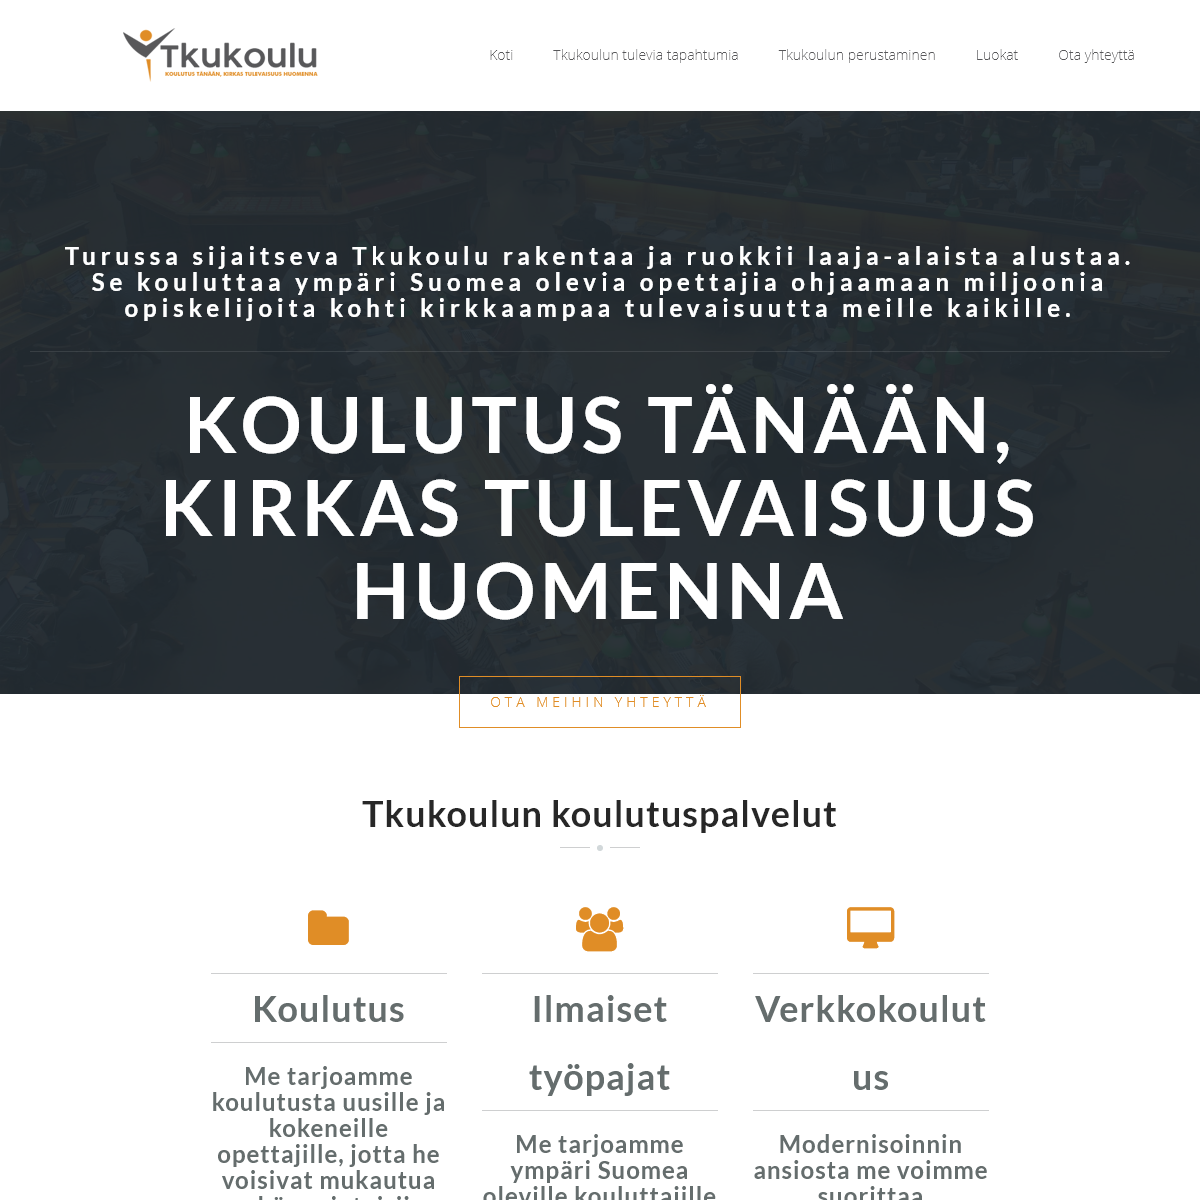 A complete backup of tkukoulu.fi